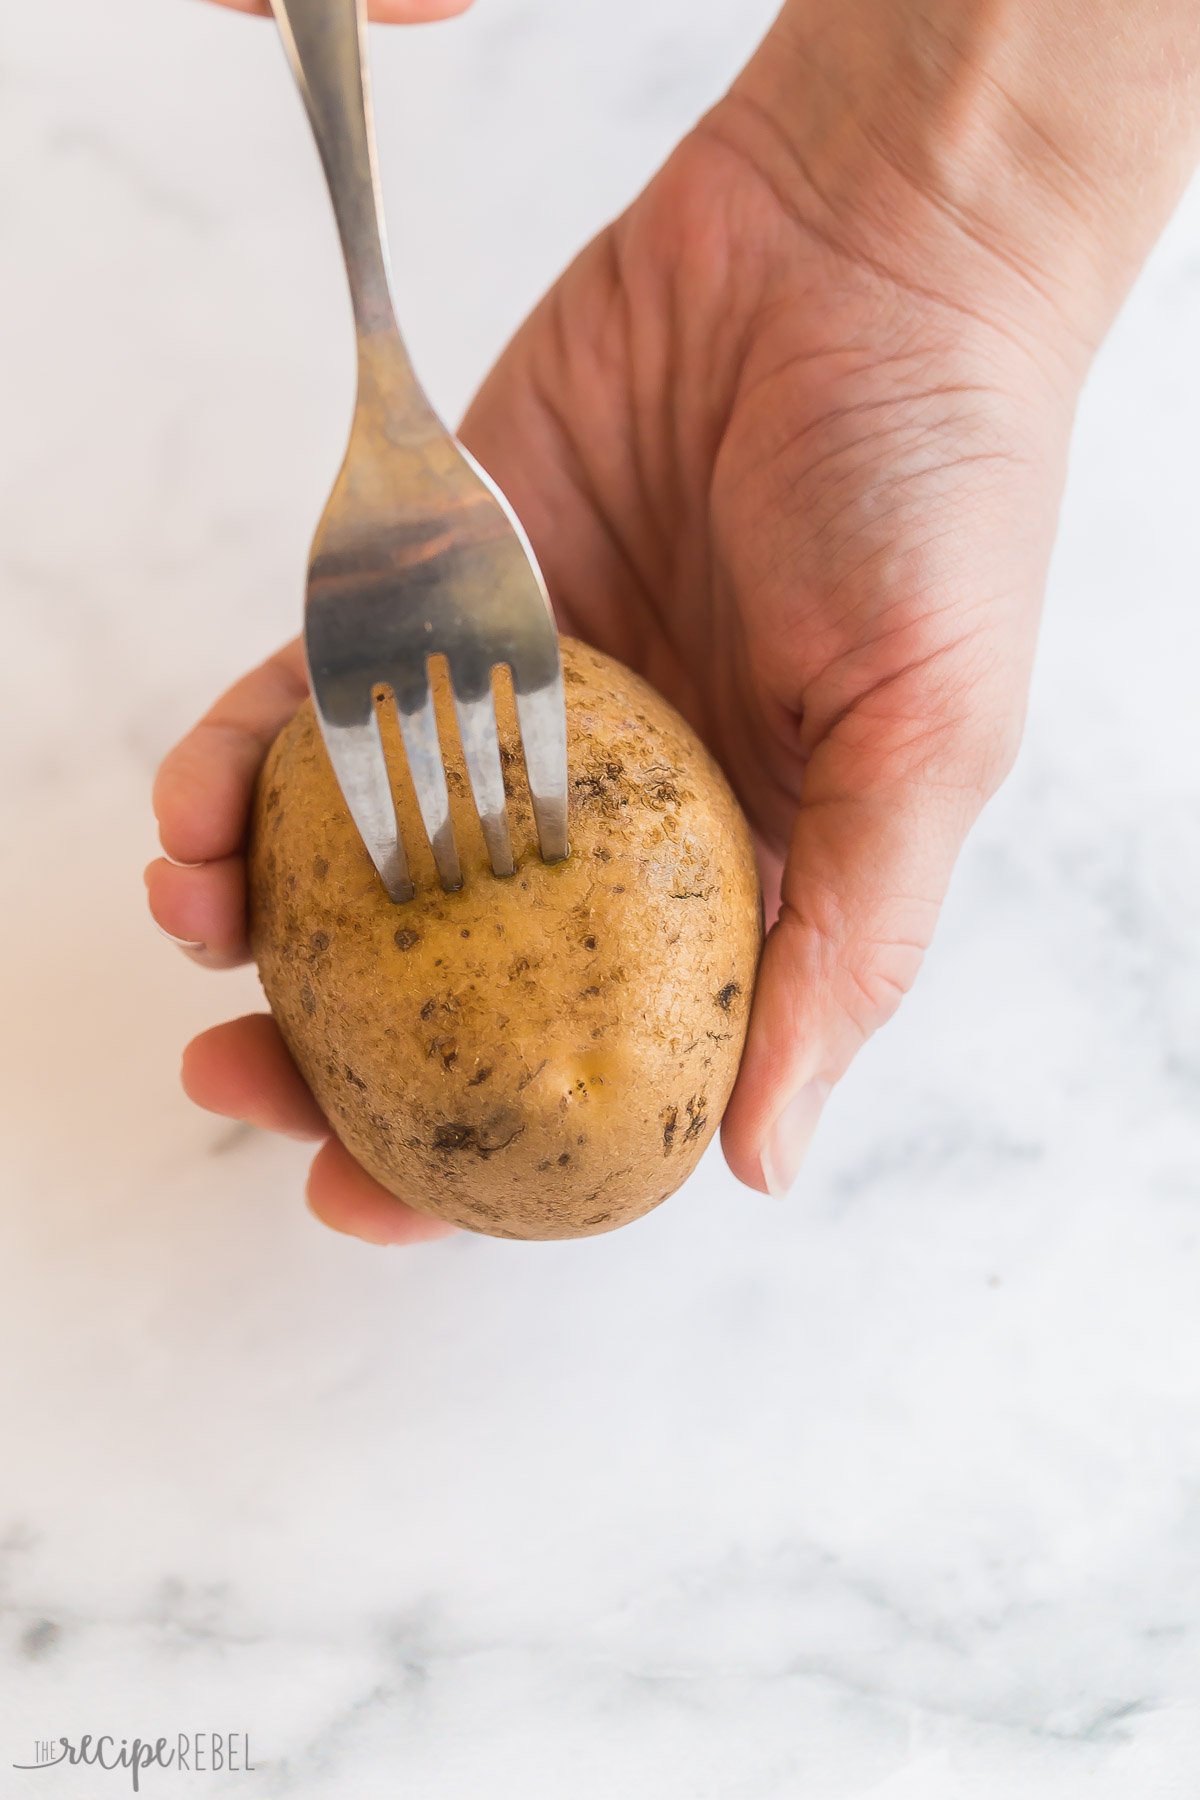 fork poking russet potato for microwave baked potato